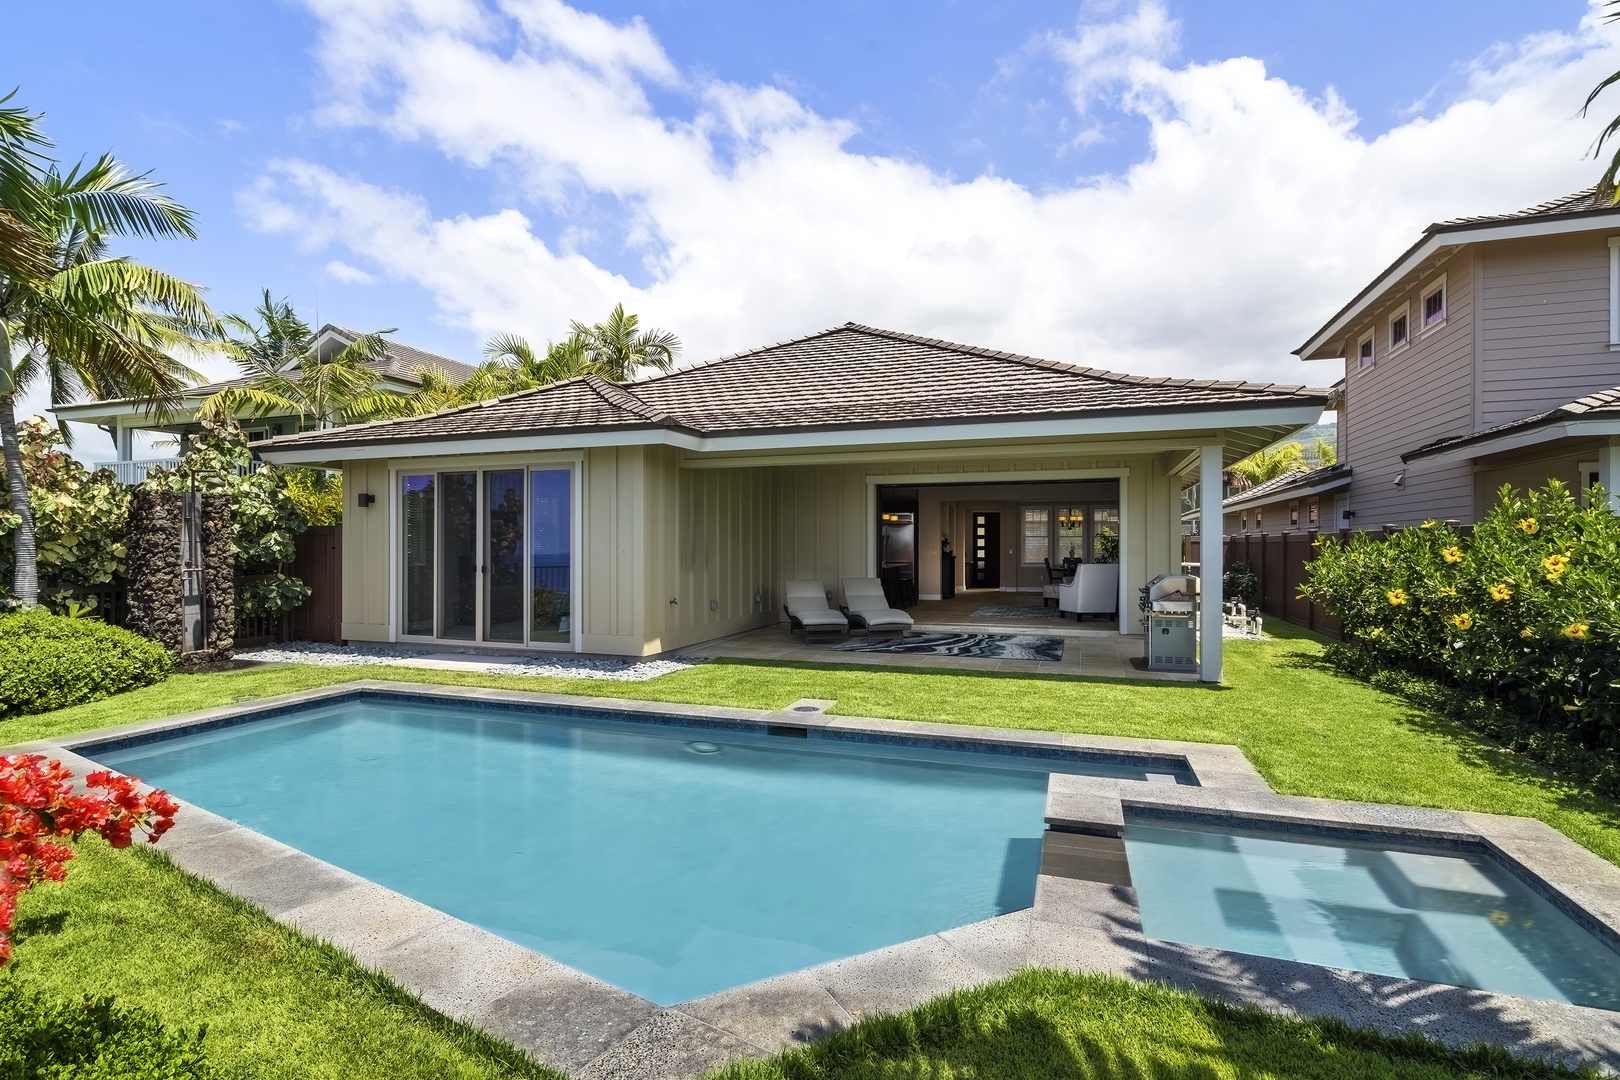 Kailua Kona Vacation Rentals, Green/Blue Combo - No better setting to enjoy your Big Island Vacation!